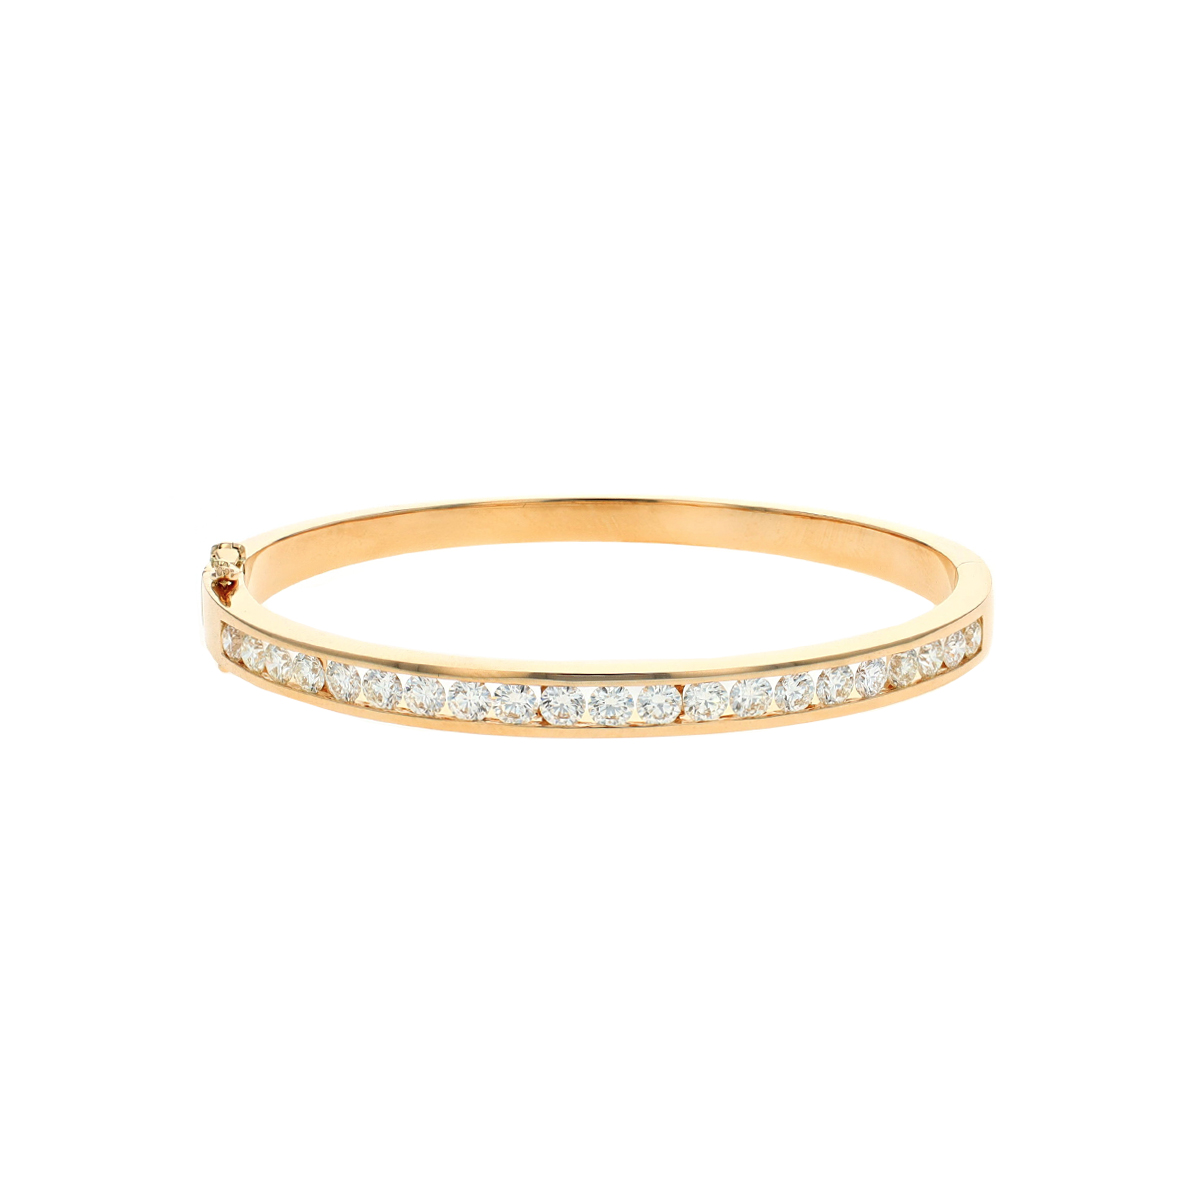 14K Yellow Gold 3.14 Carat Diamond Bangle Bracelet